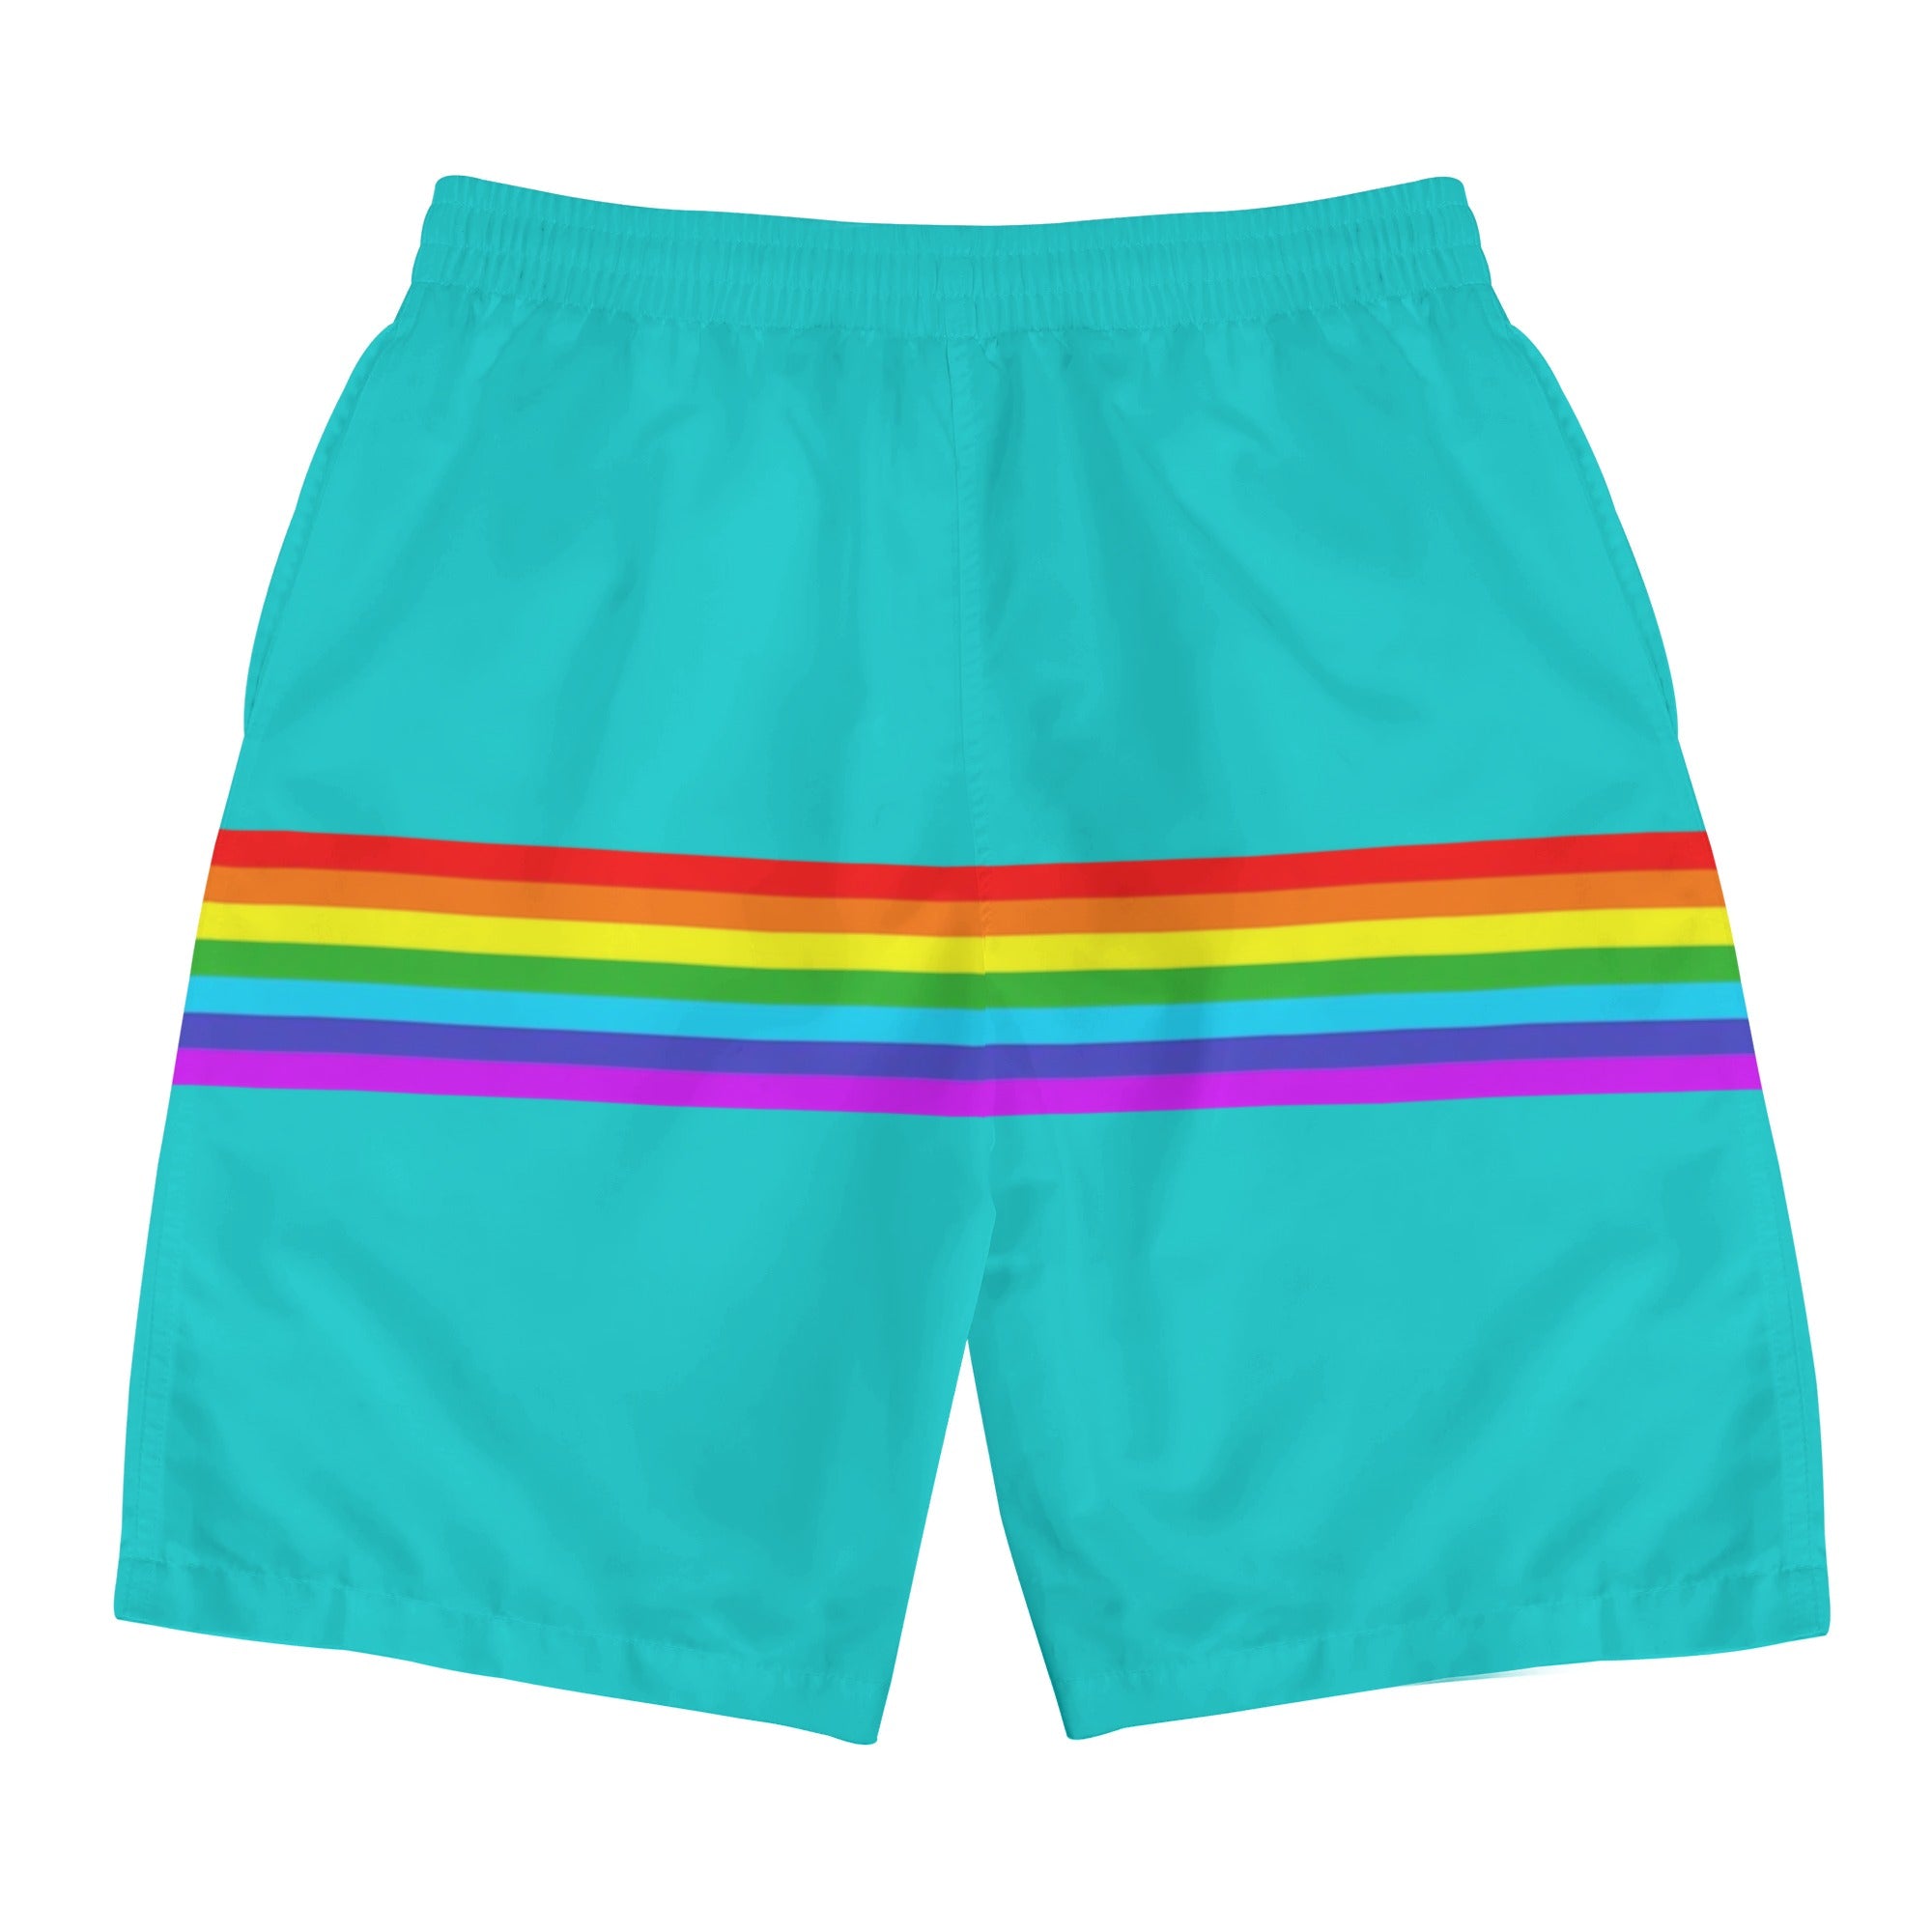 LGBT_Pride-Blue Mens All Over Print Board Shorts - Rose Gold Co. Shop